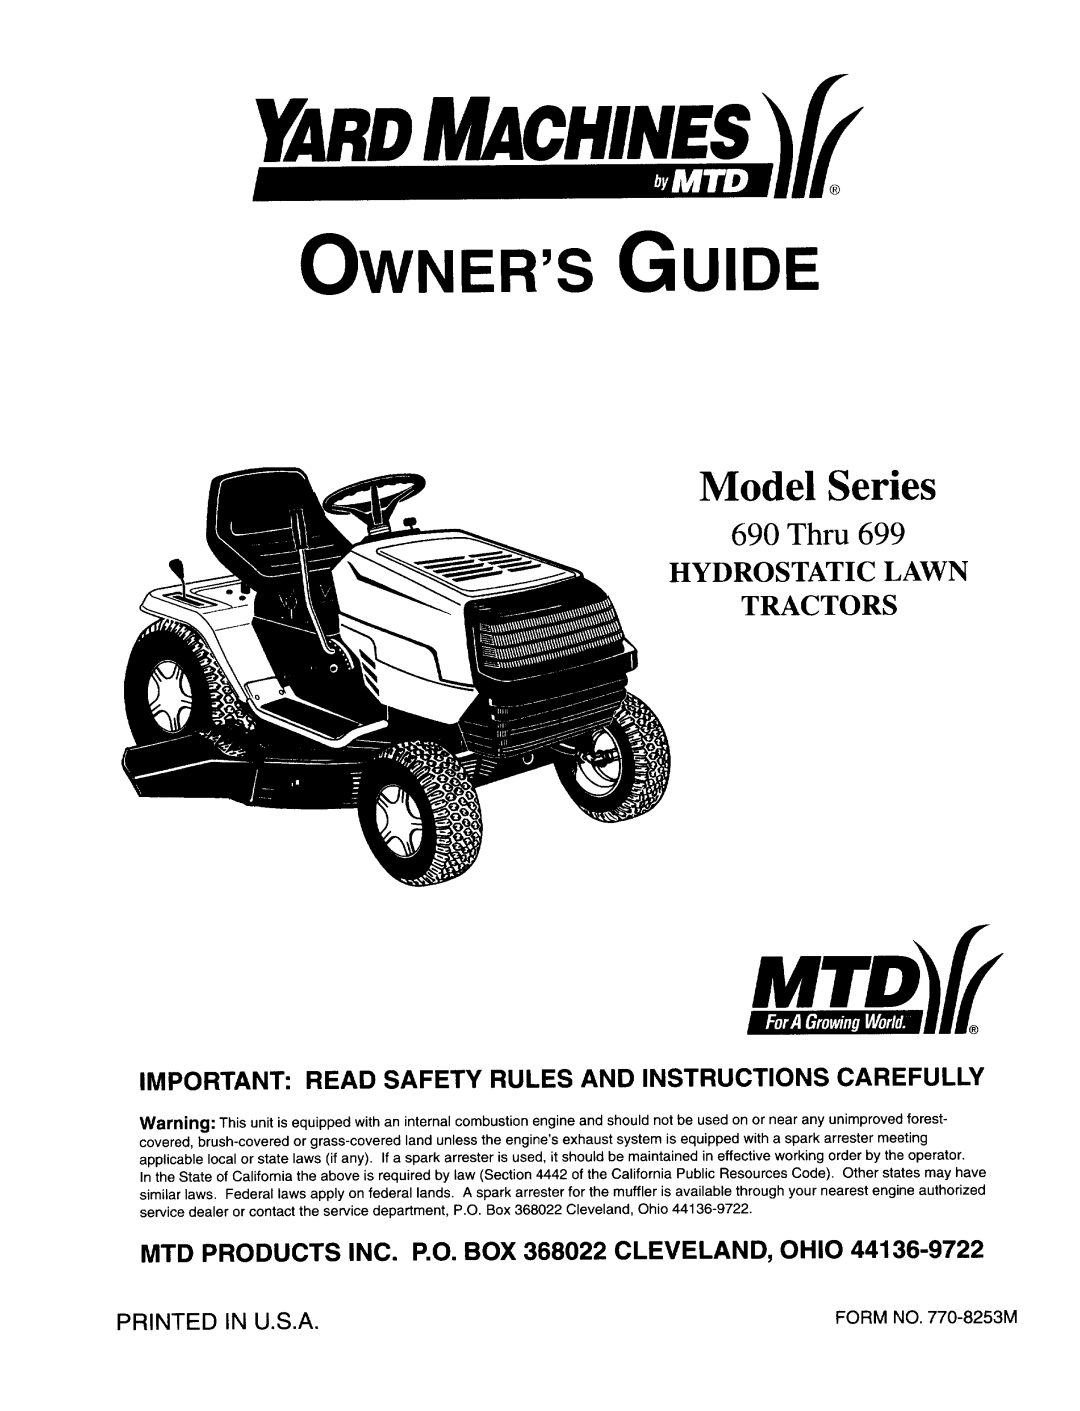 Yard Machines 690 manual MTD PRODUCTS INC. P.O. BOX 368022 CLEVELAND, OHIO, Yardmachines, OWNERSGUiD, Model Series, Thru 